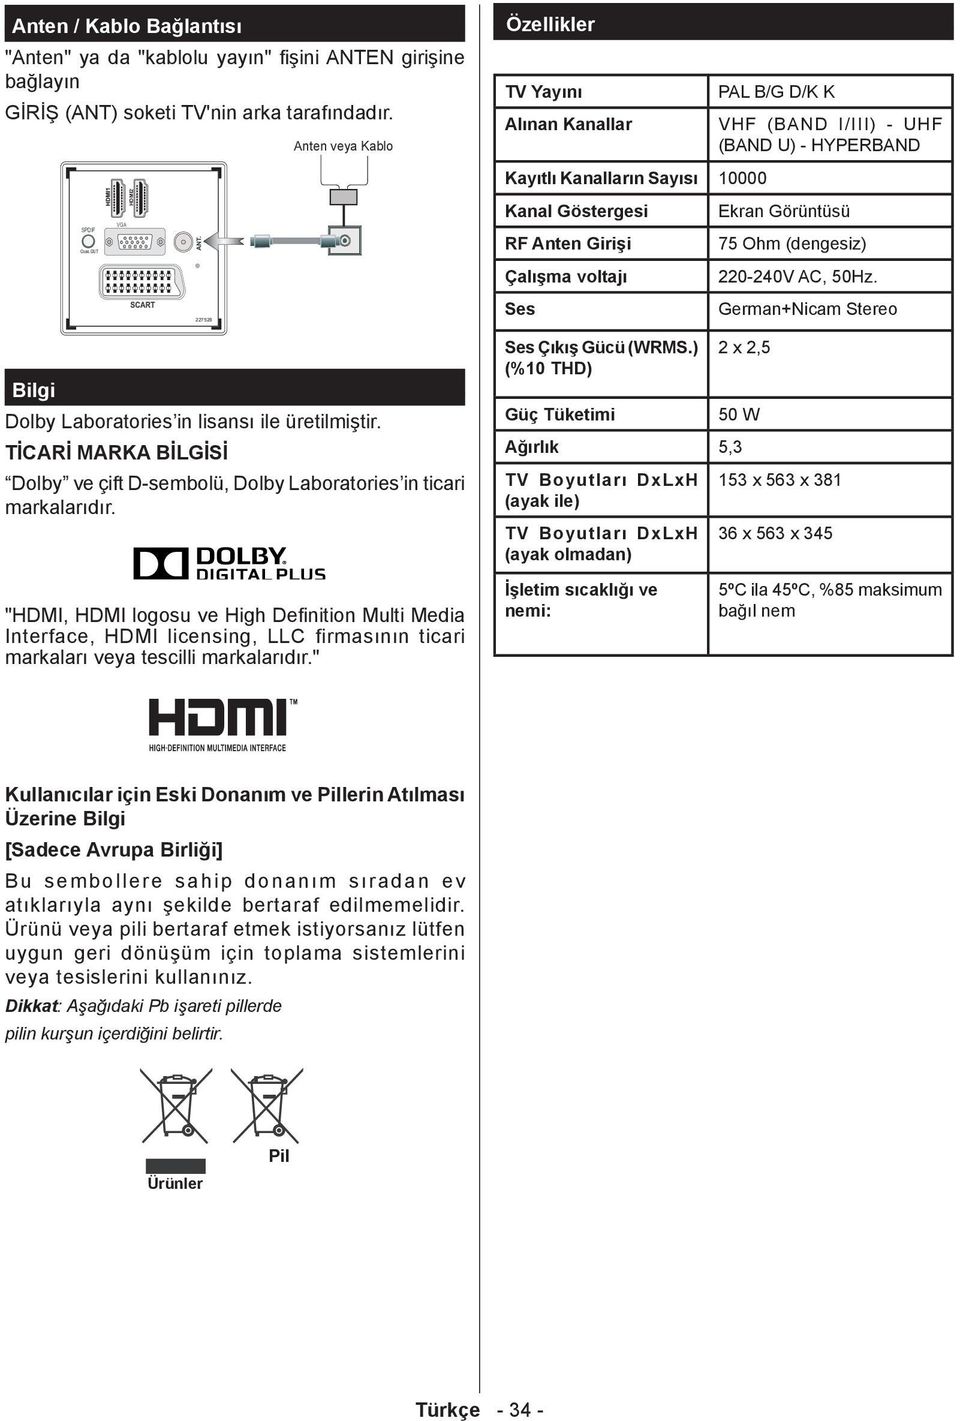 "HDMI, HDMI logosu ve High Definition Multi Media Interface, HDMI licensing, LLC firmasının ticari markaları veya tescilli markalarıdır.